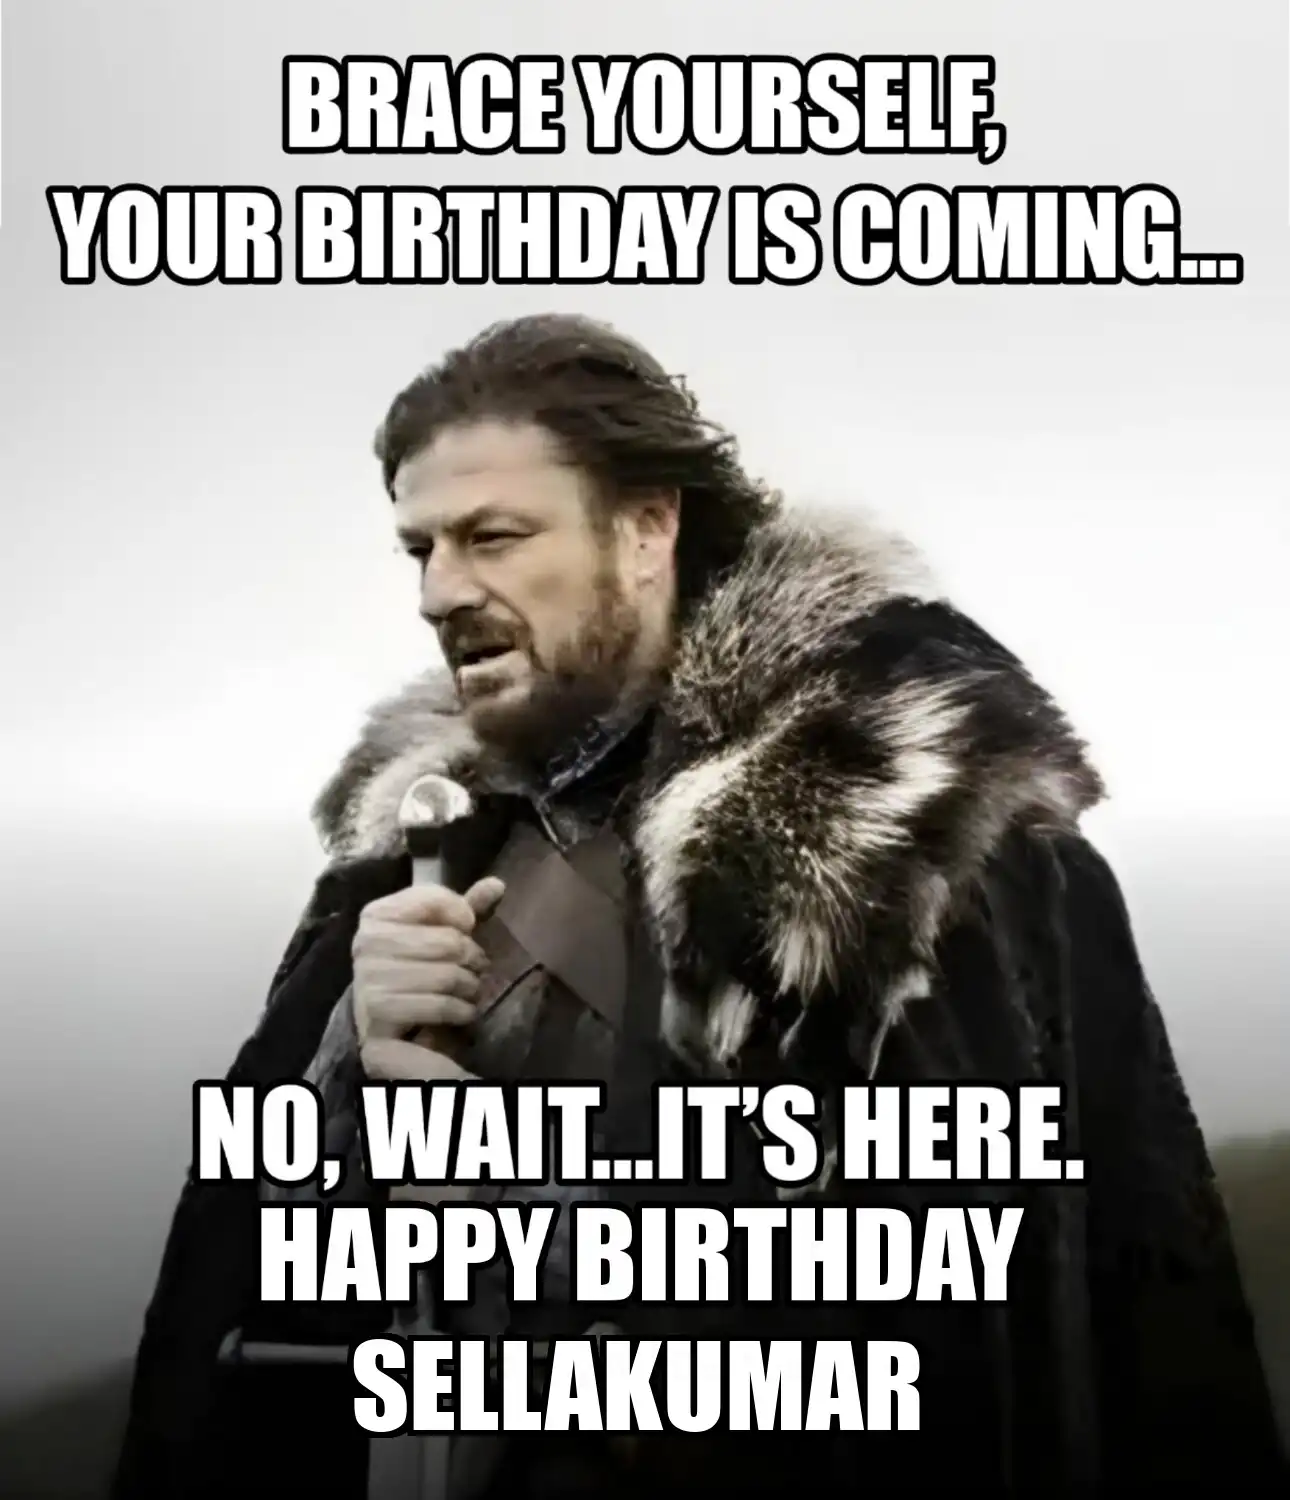 Happy Birthday Sellakumar Brace Yourself Your Birthday Is Coming Meme